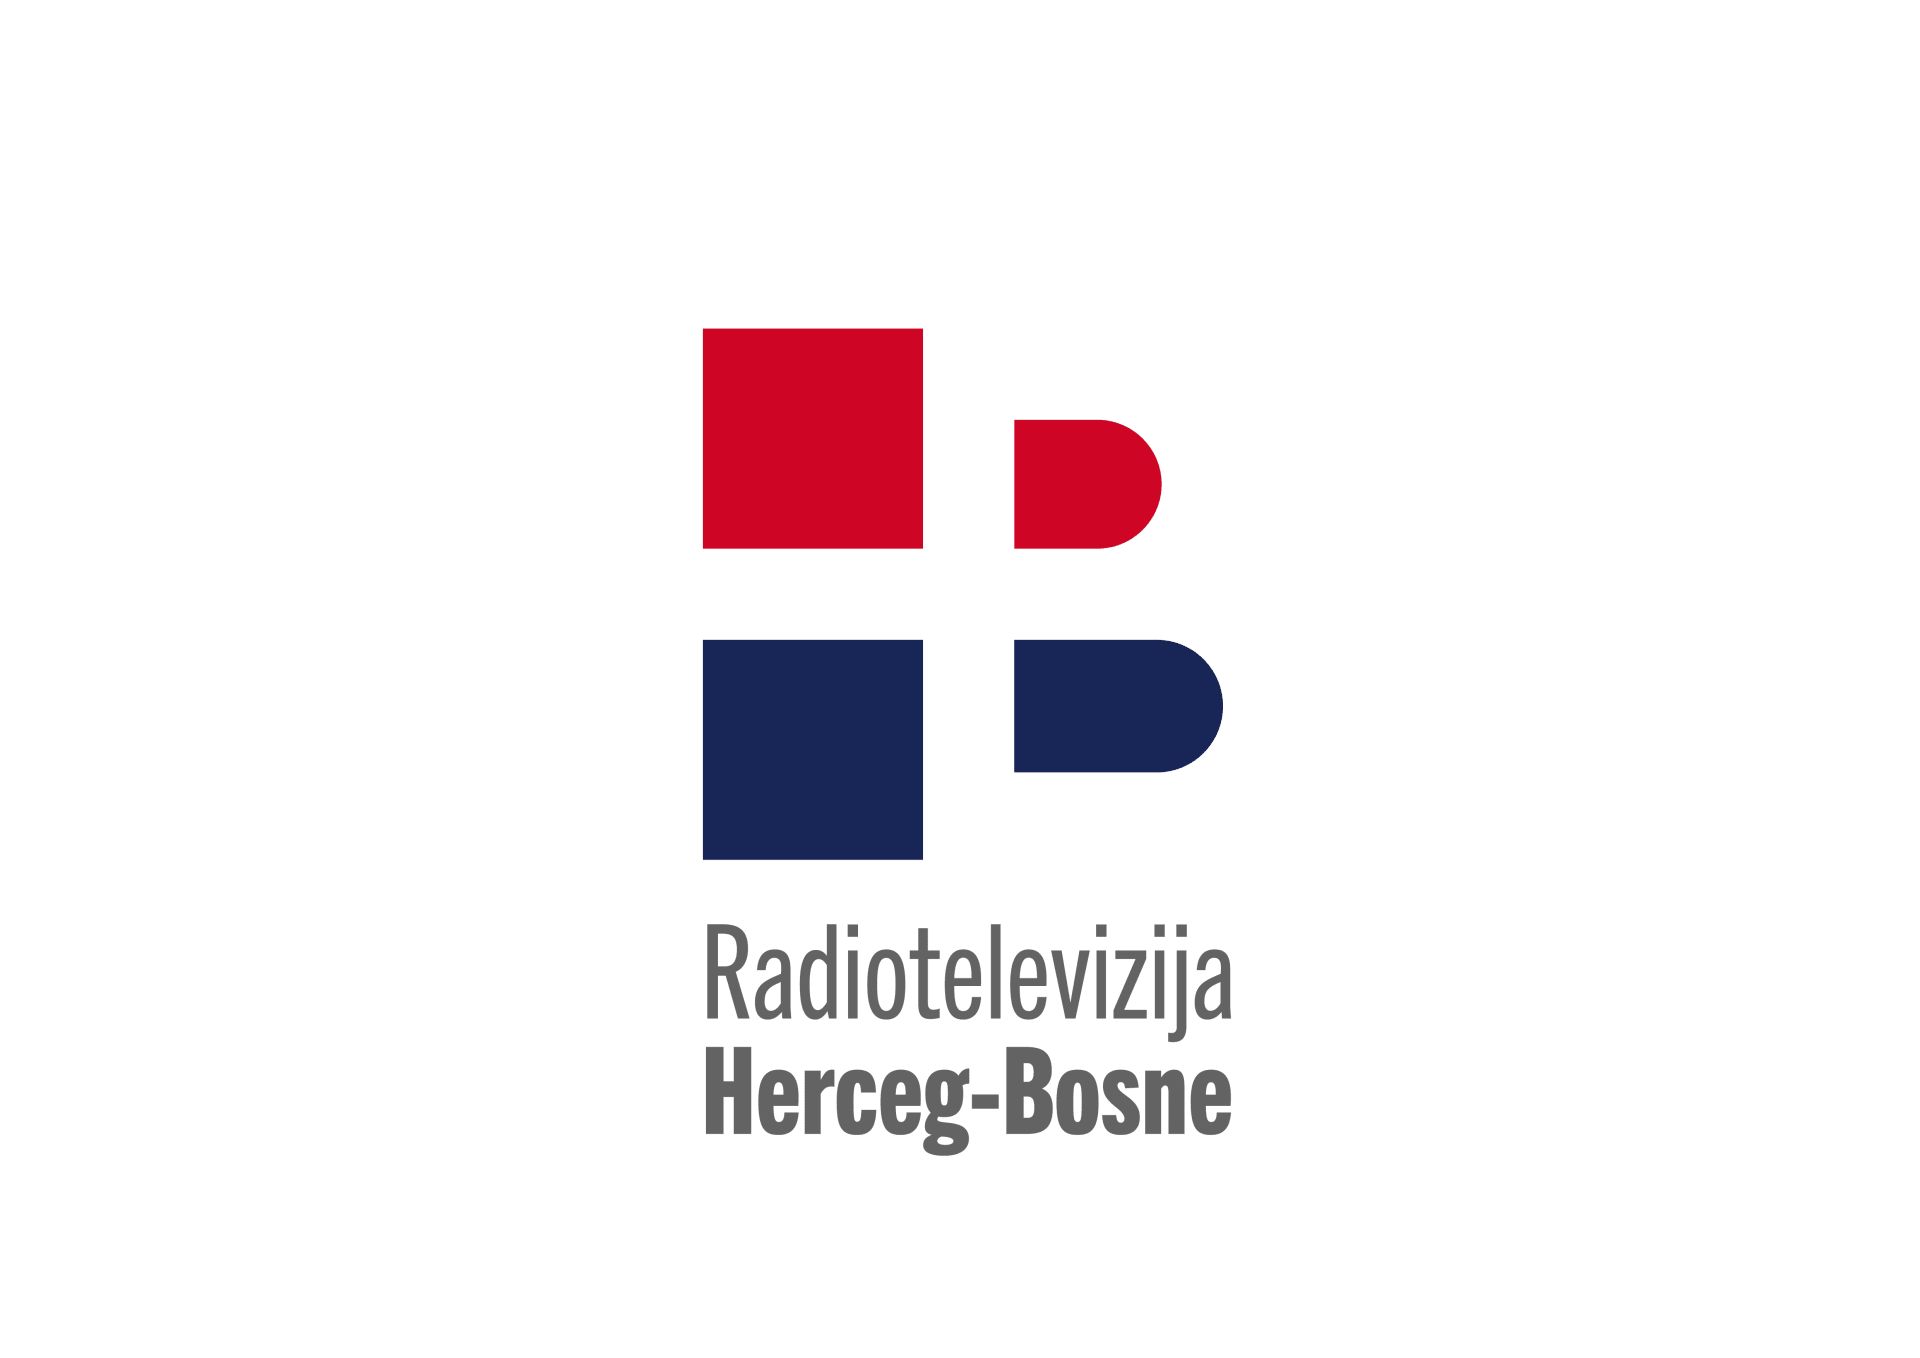 Radiotelevizija Herceg-Bosna